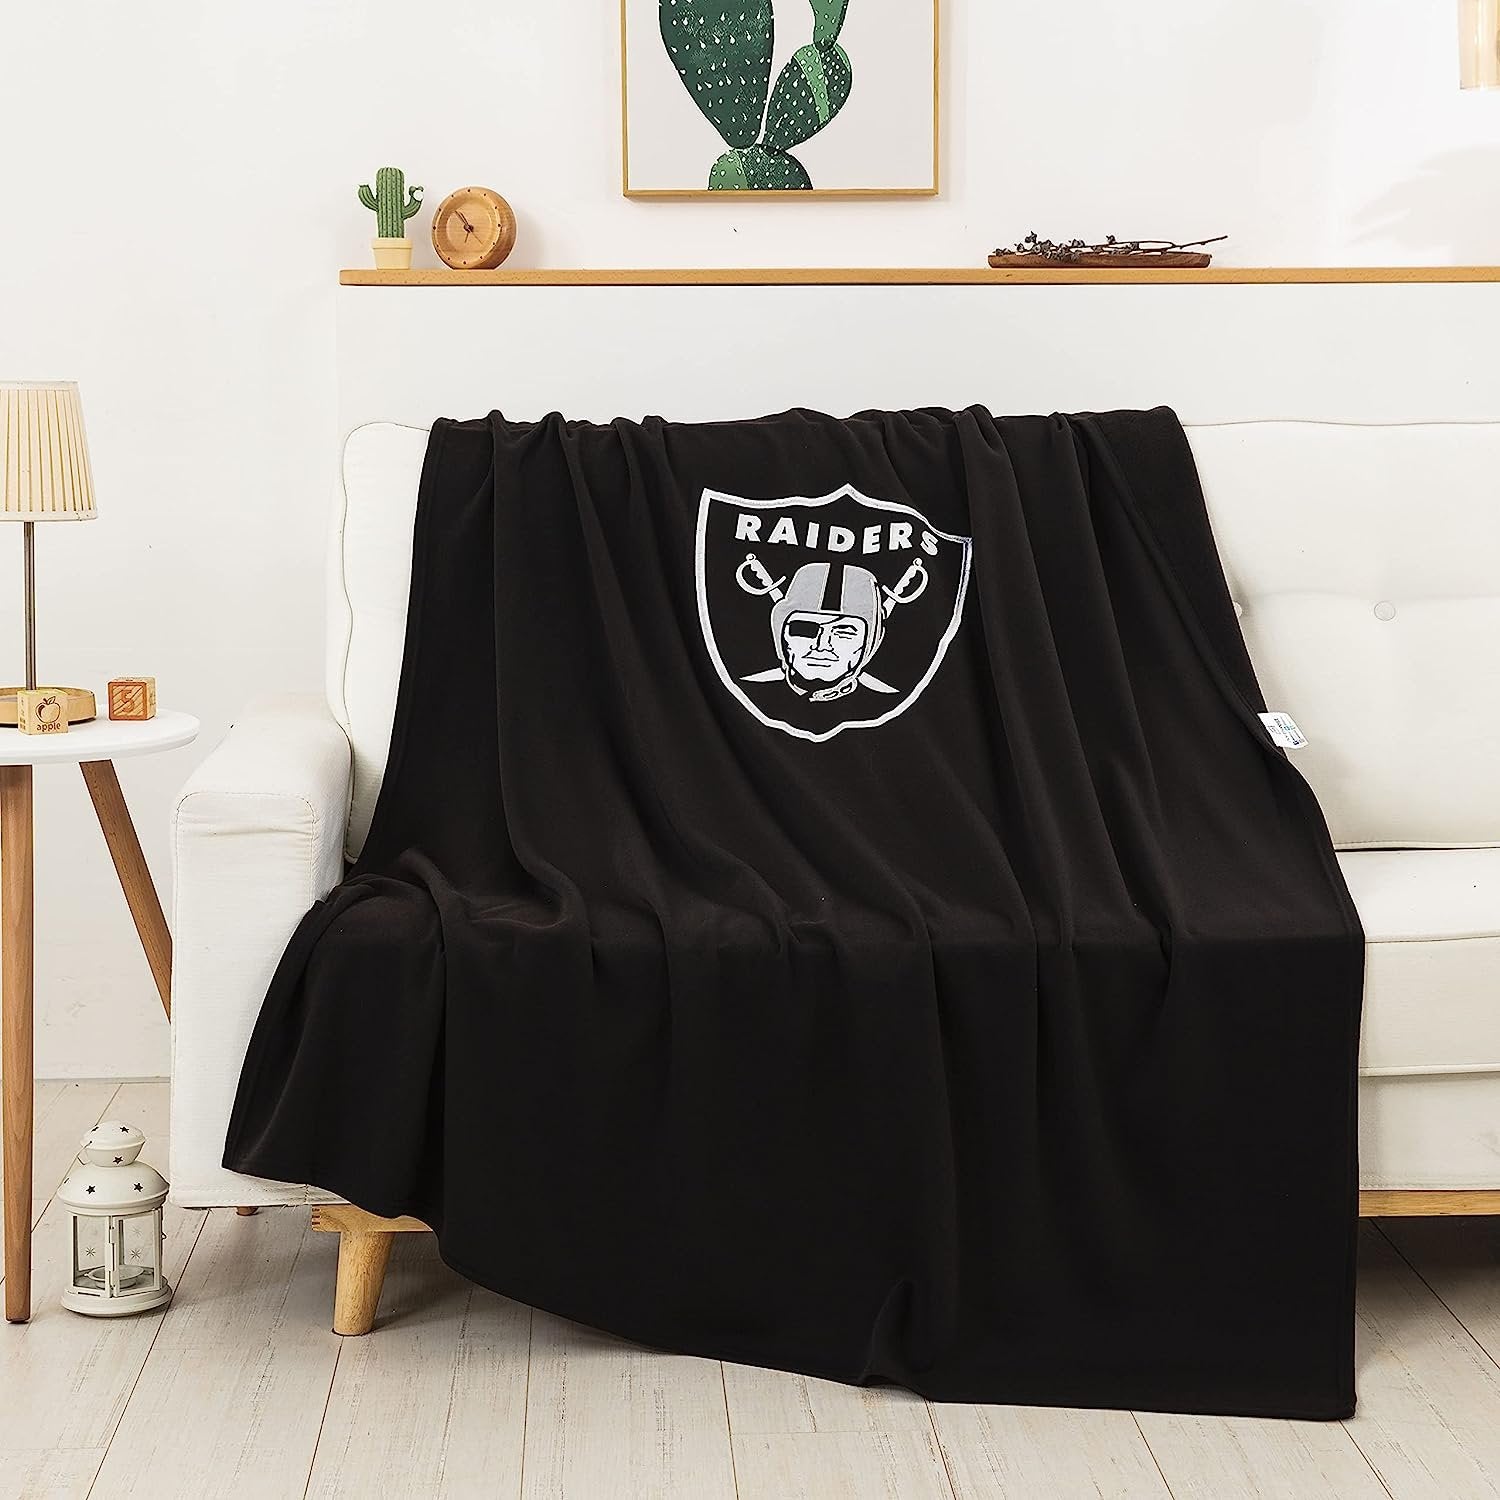 Las Vegas Raiders Throw Blanket, Sweatshirt Design, Embroidered Logo, Dominate Style, 54x84 Inch